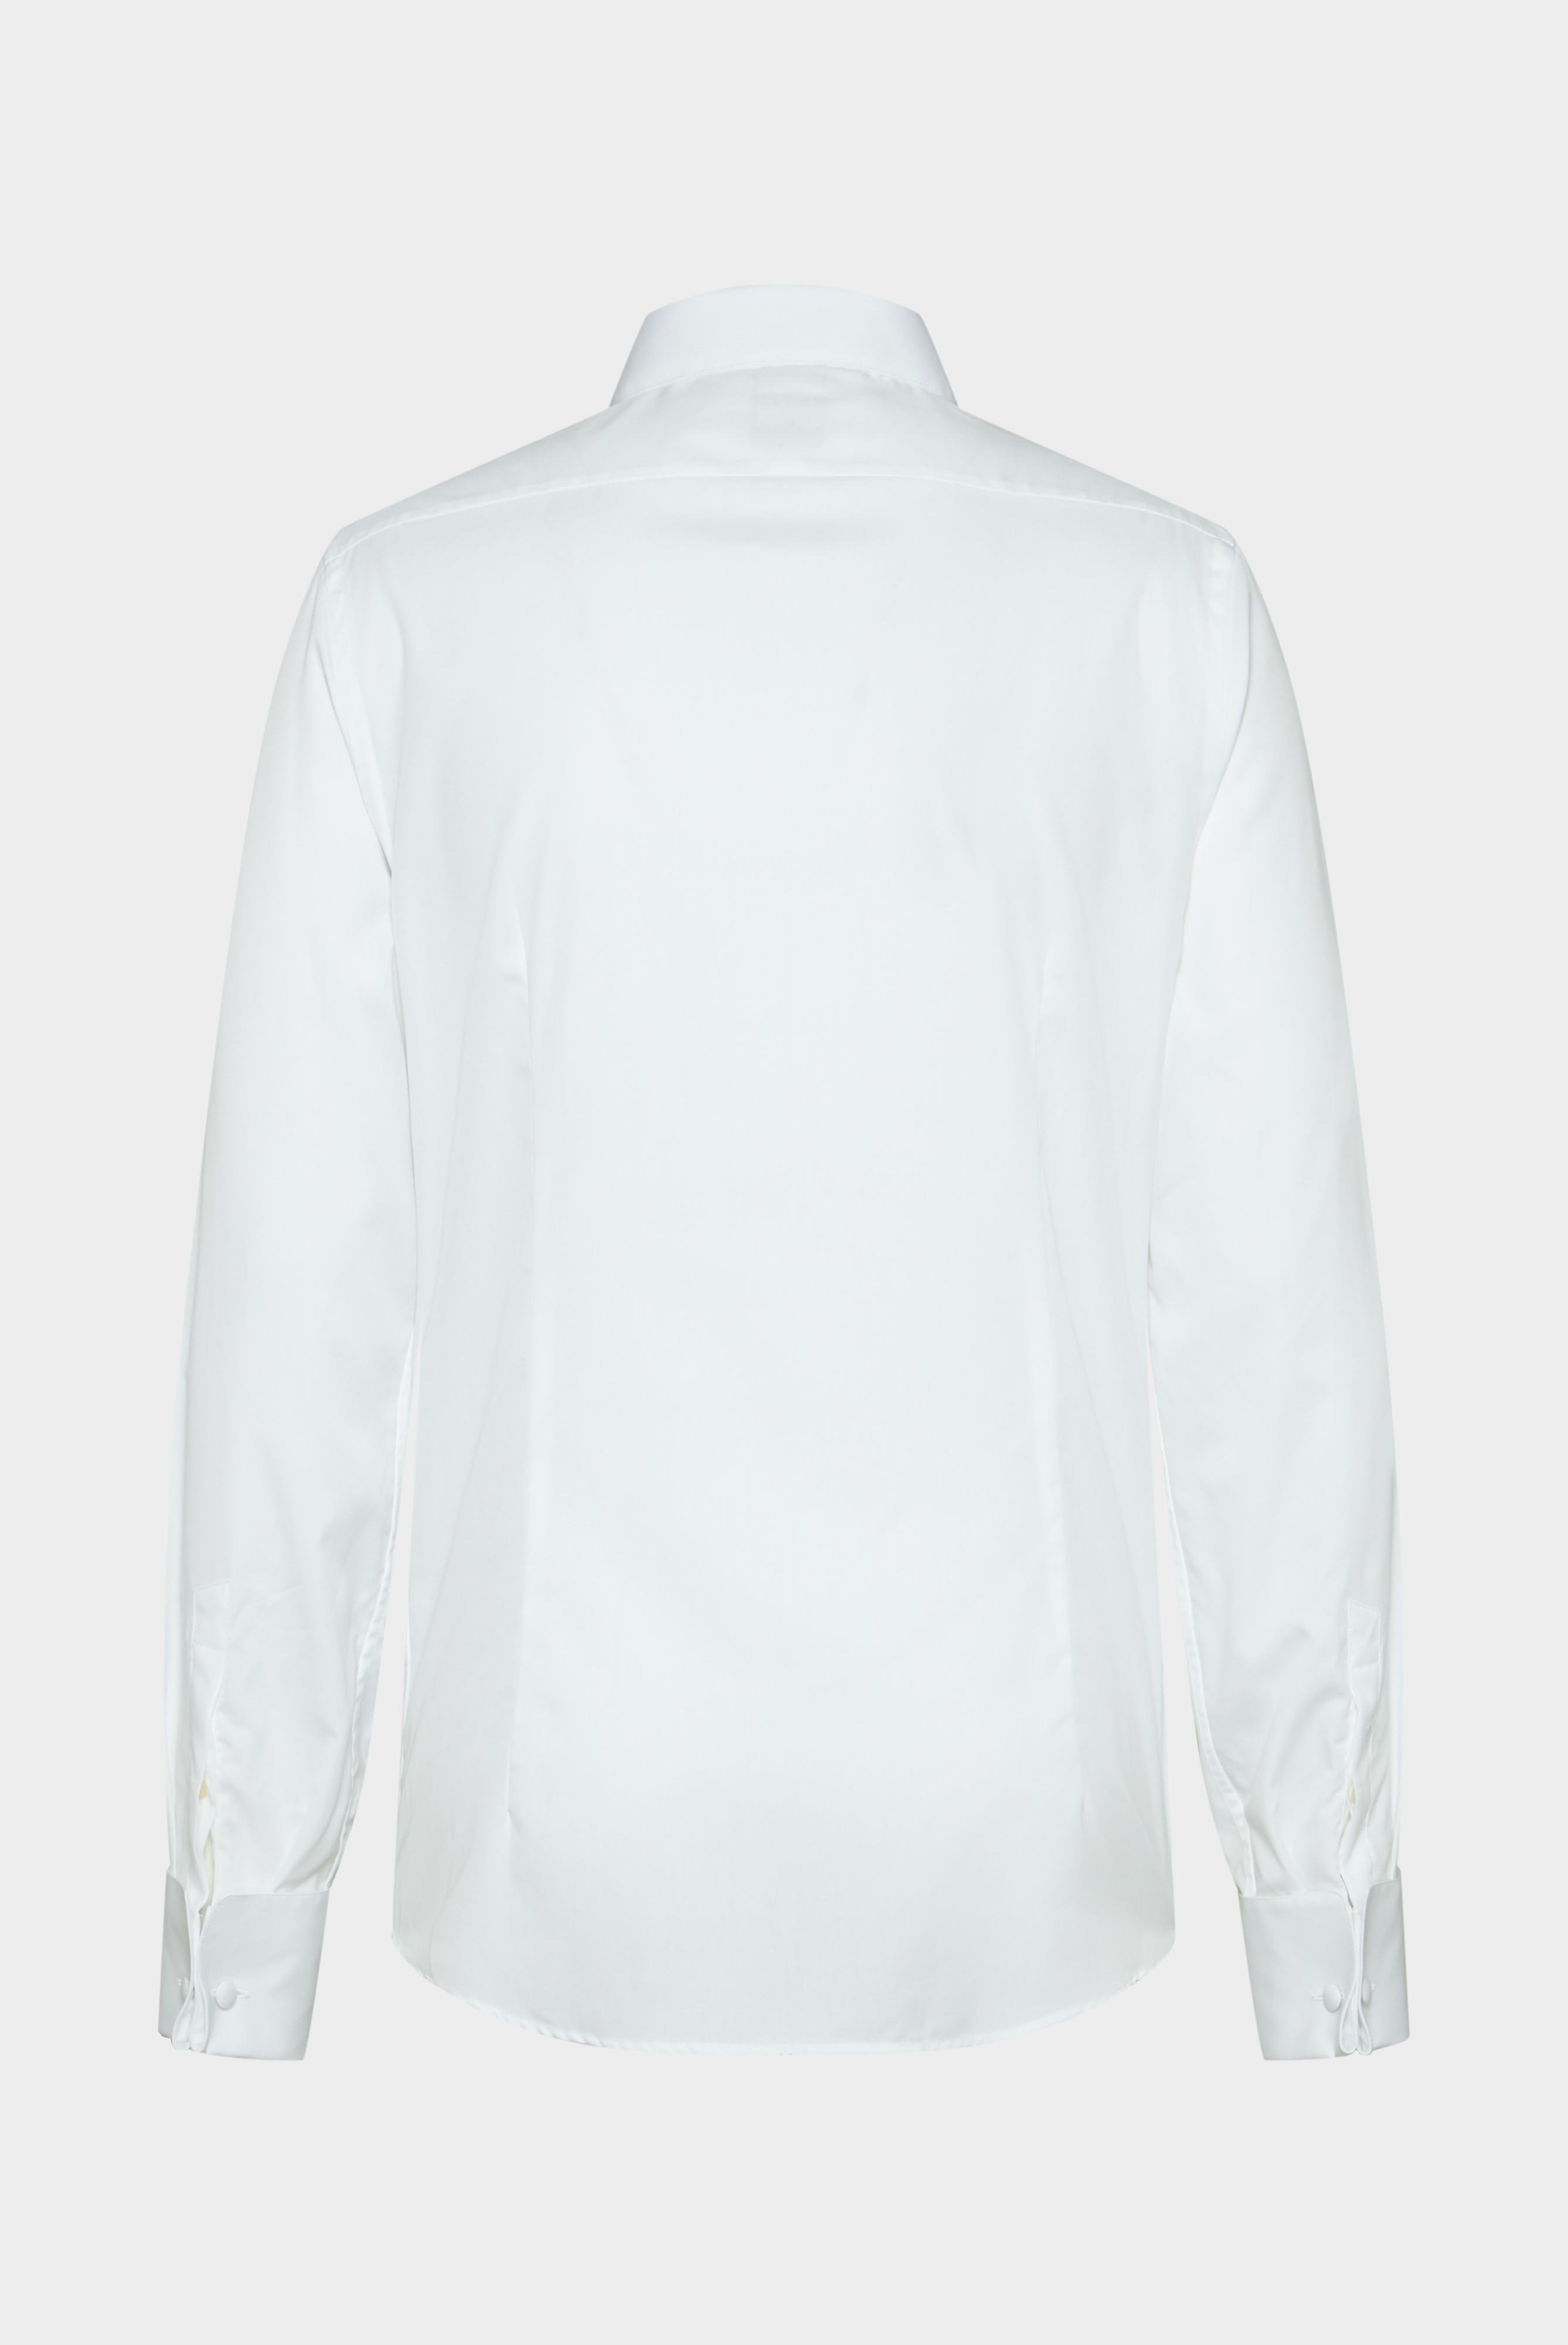 Festliche Hemden+Poplin Double Cuff Shirt+20.2063.NV.130648.000.37